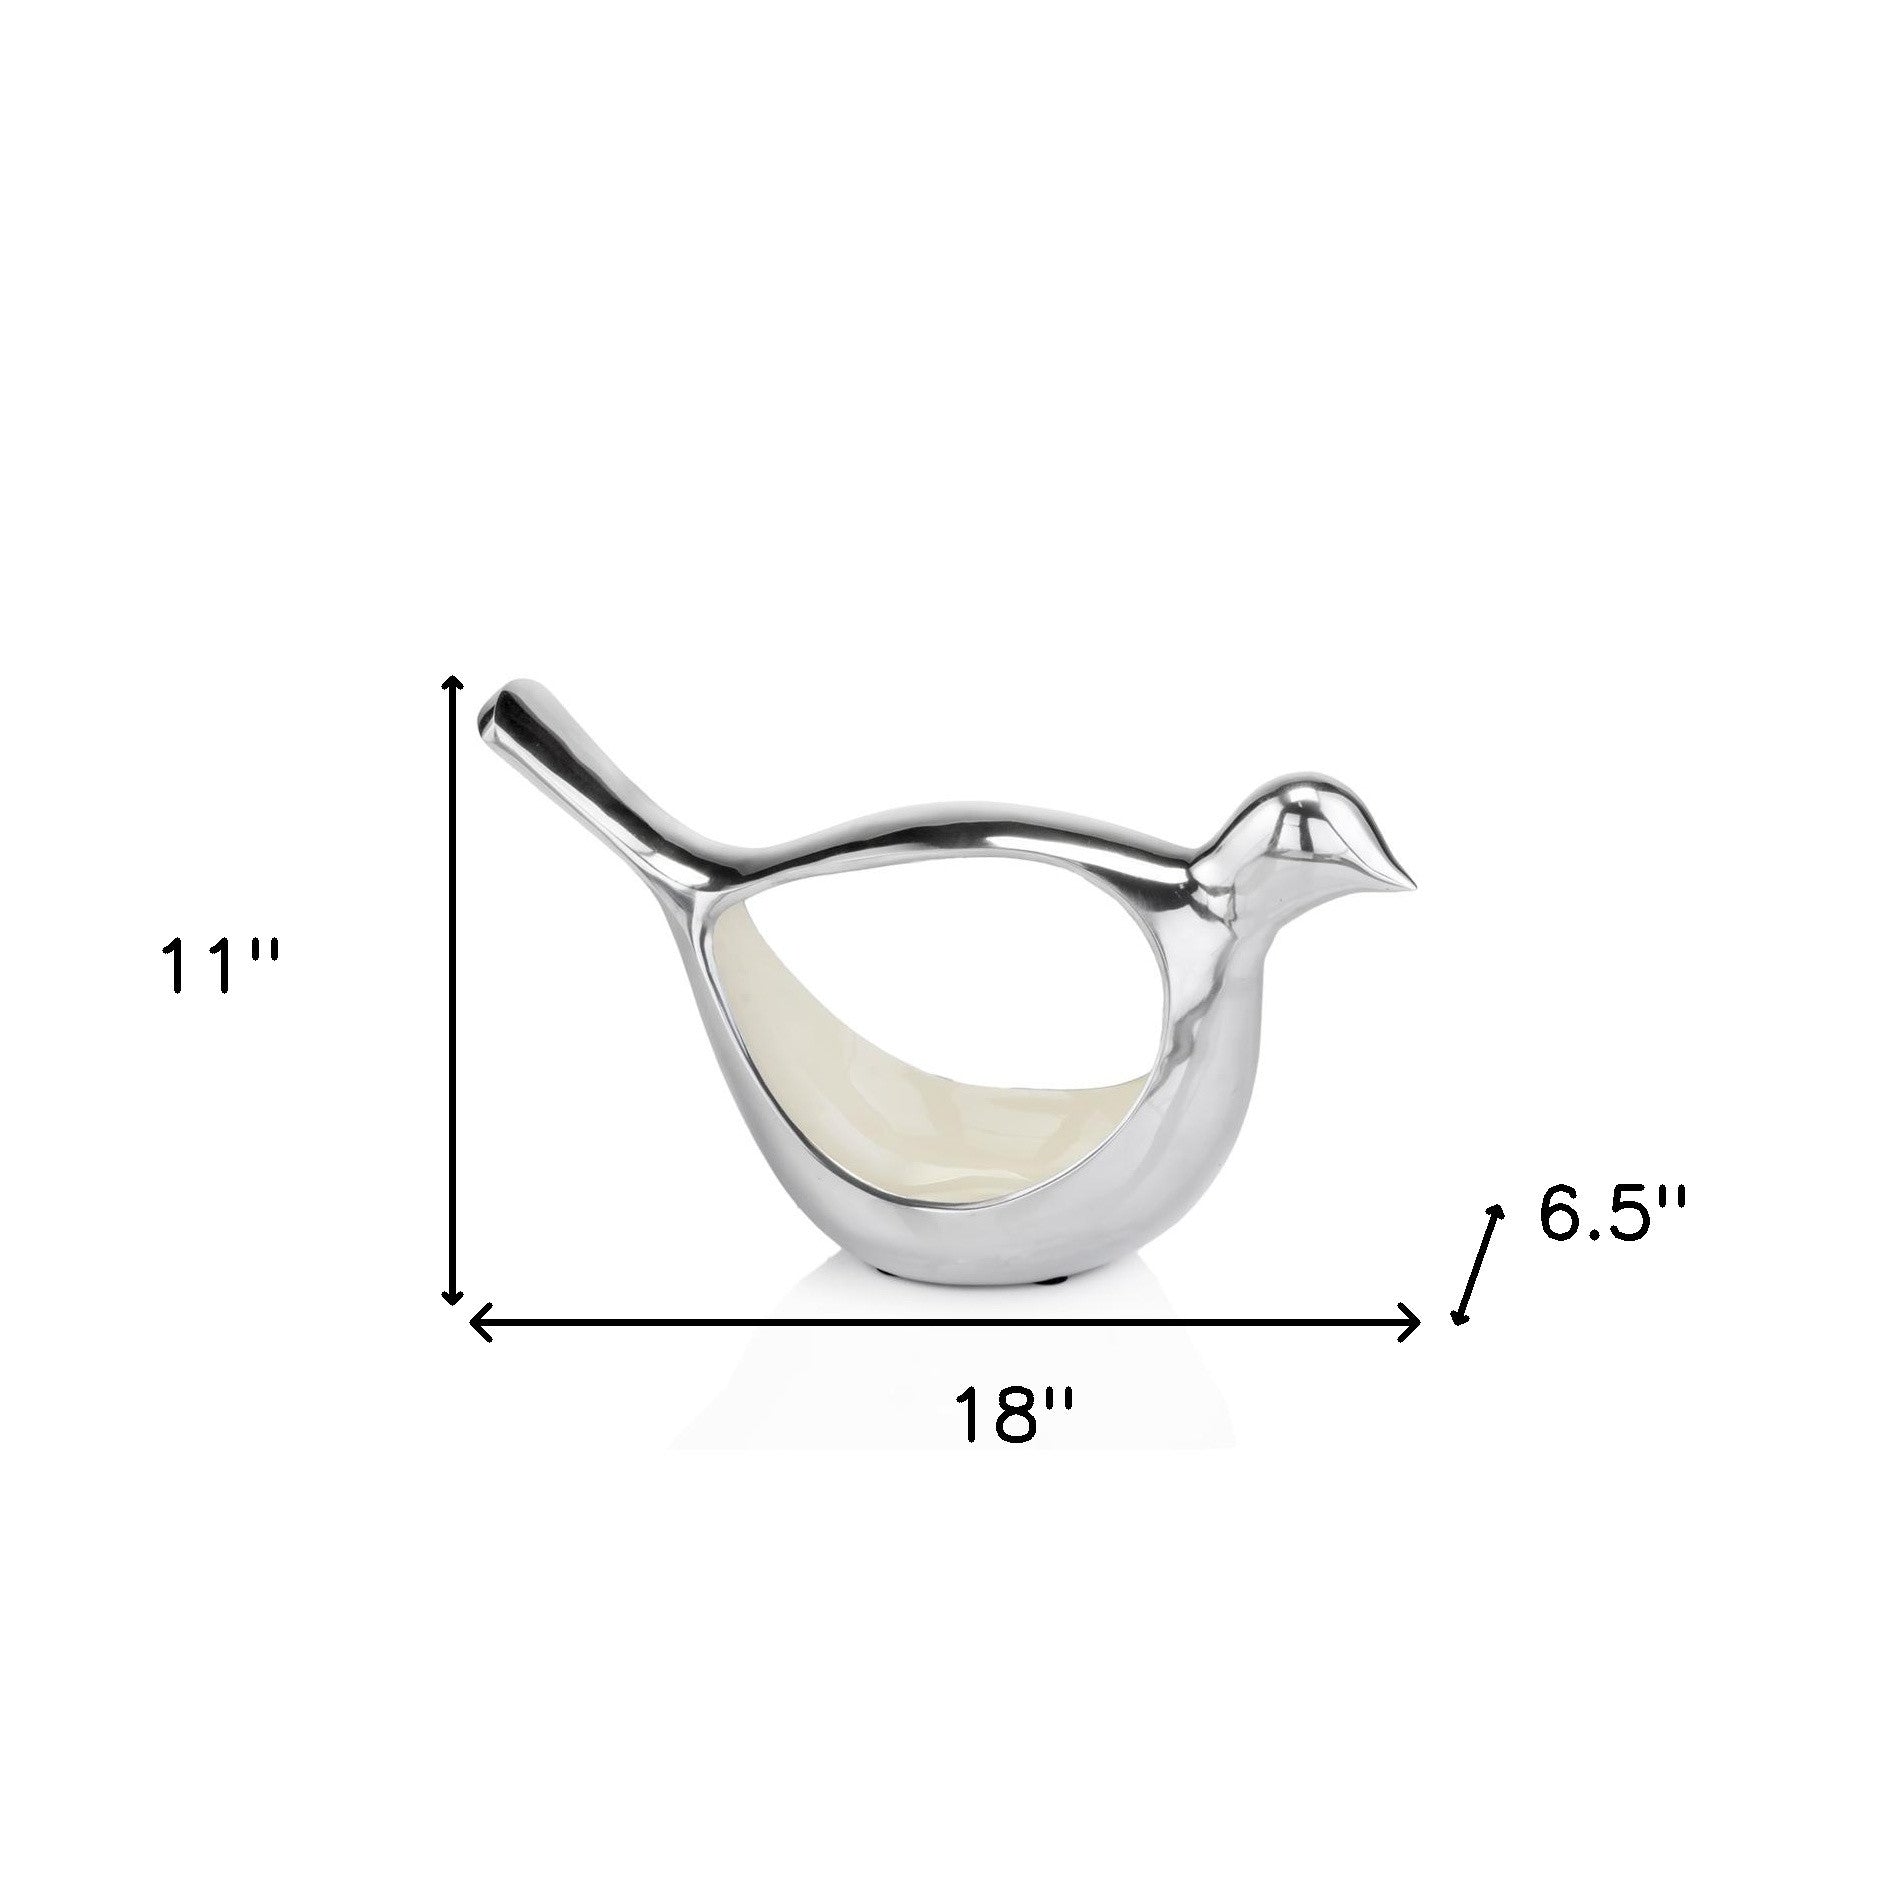 6.5" X 18" X 11" Buffed Large Dove Bowl